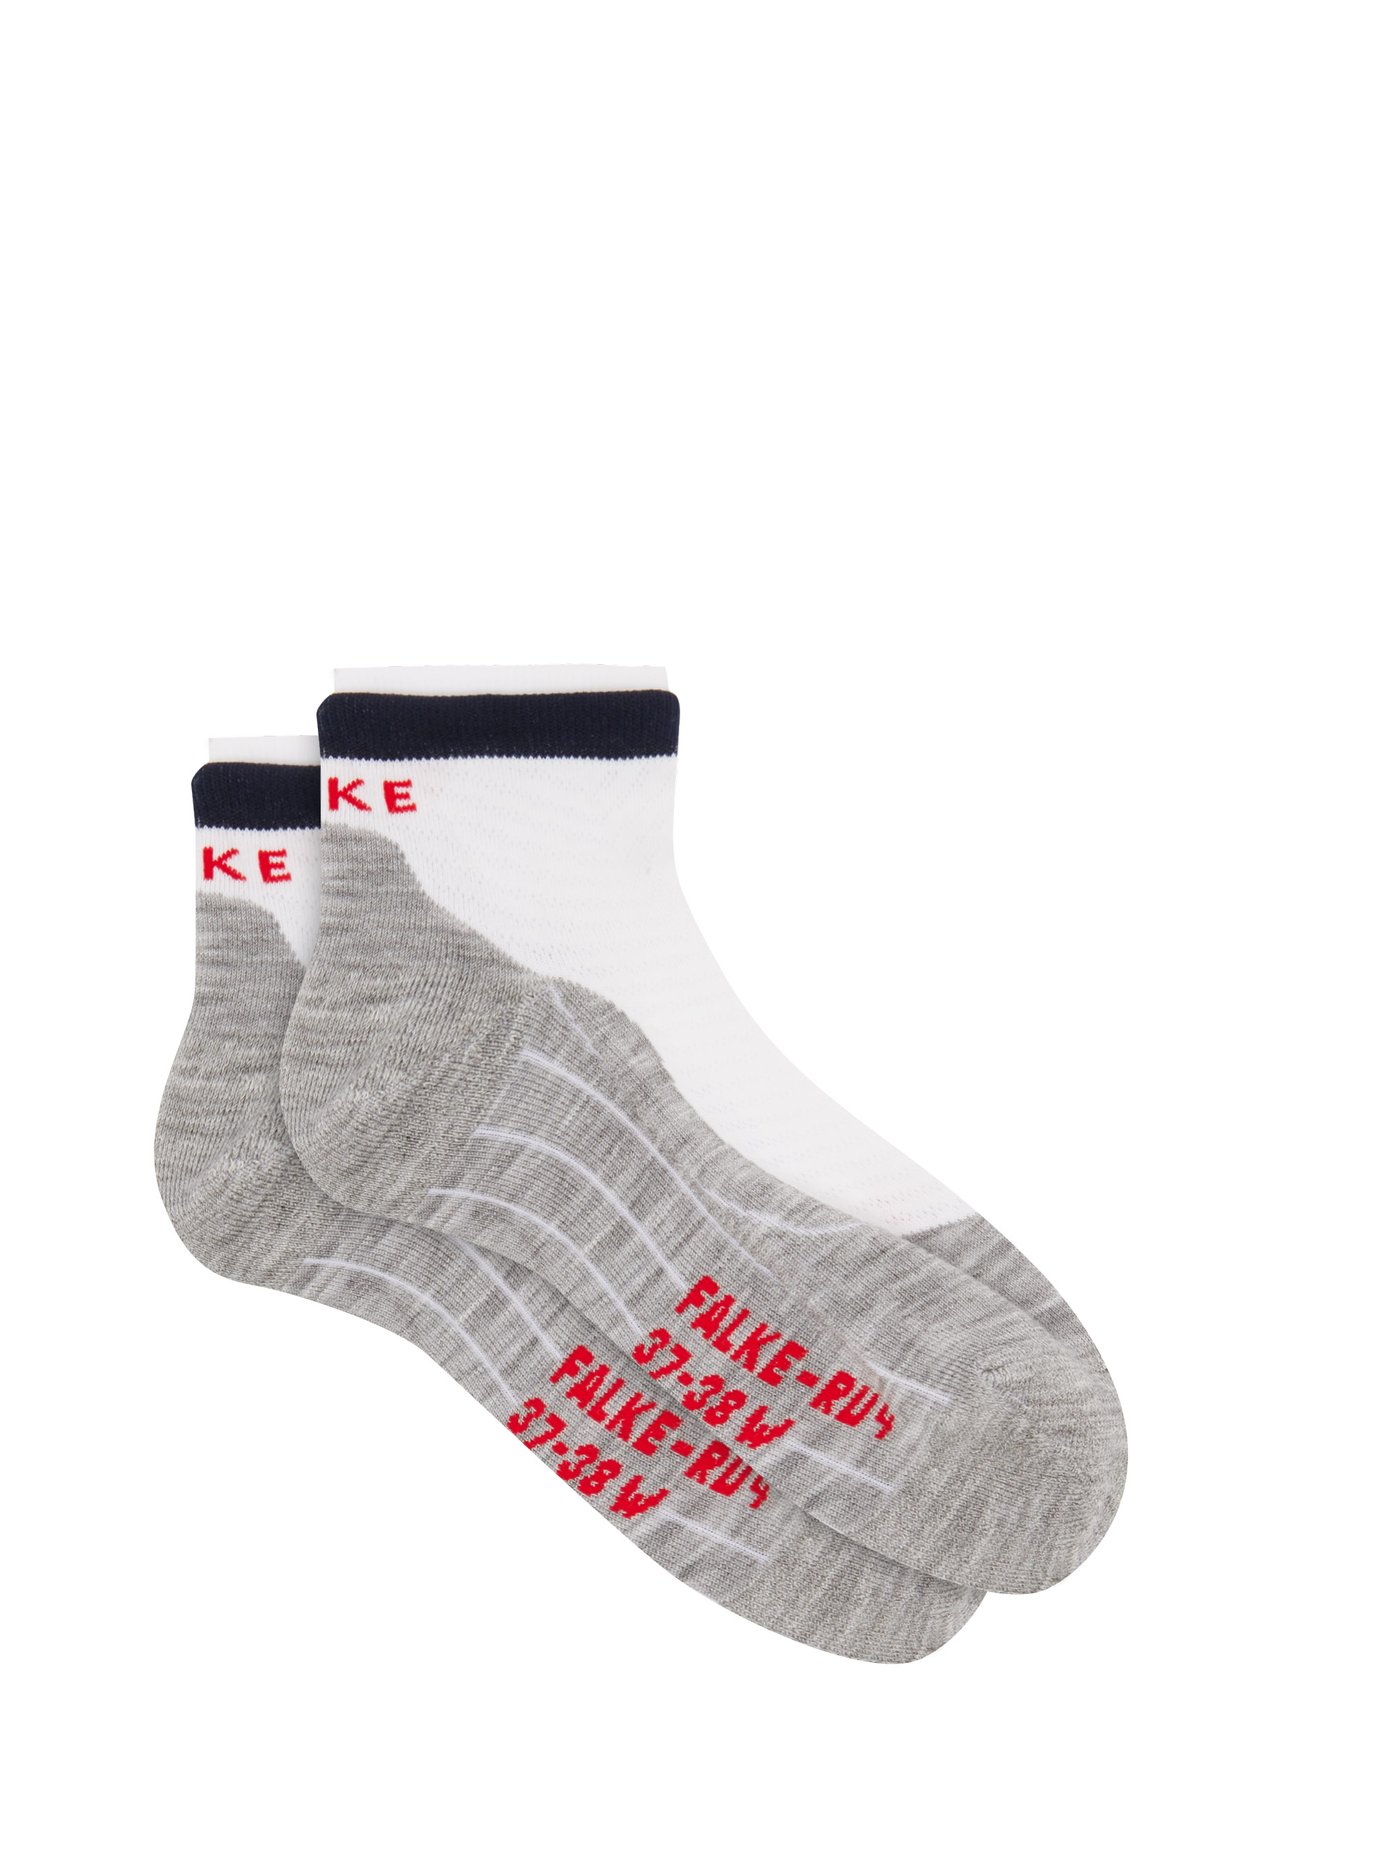 RU4 cushioned running socks | Falke 